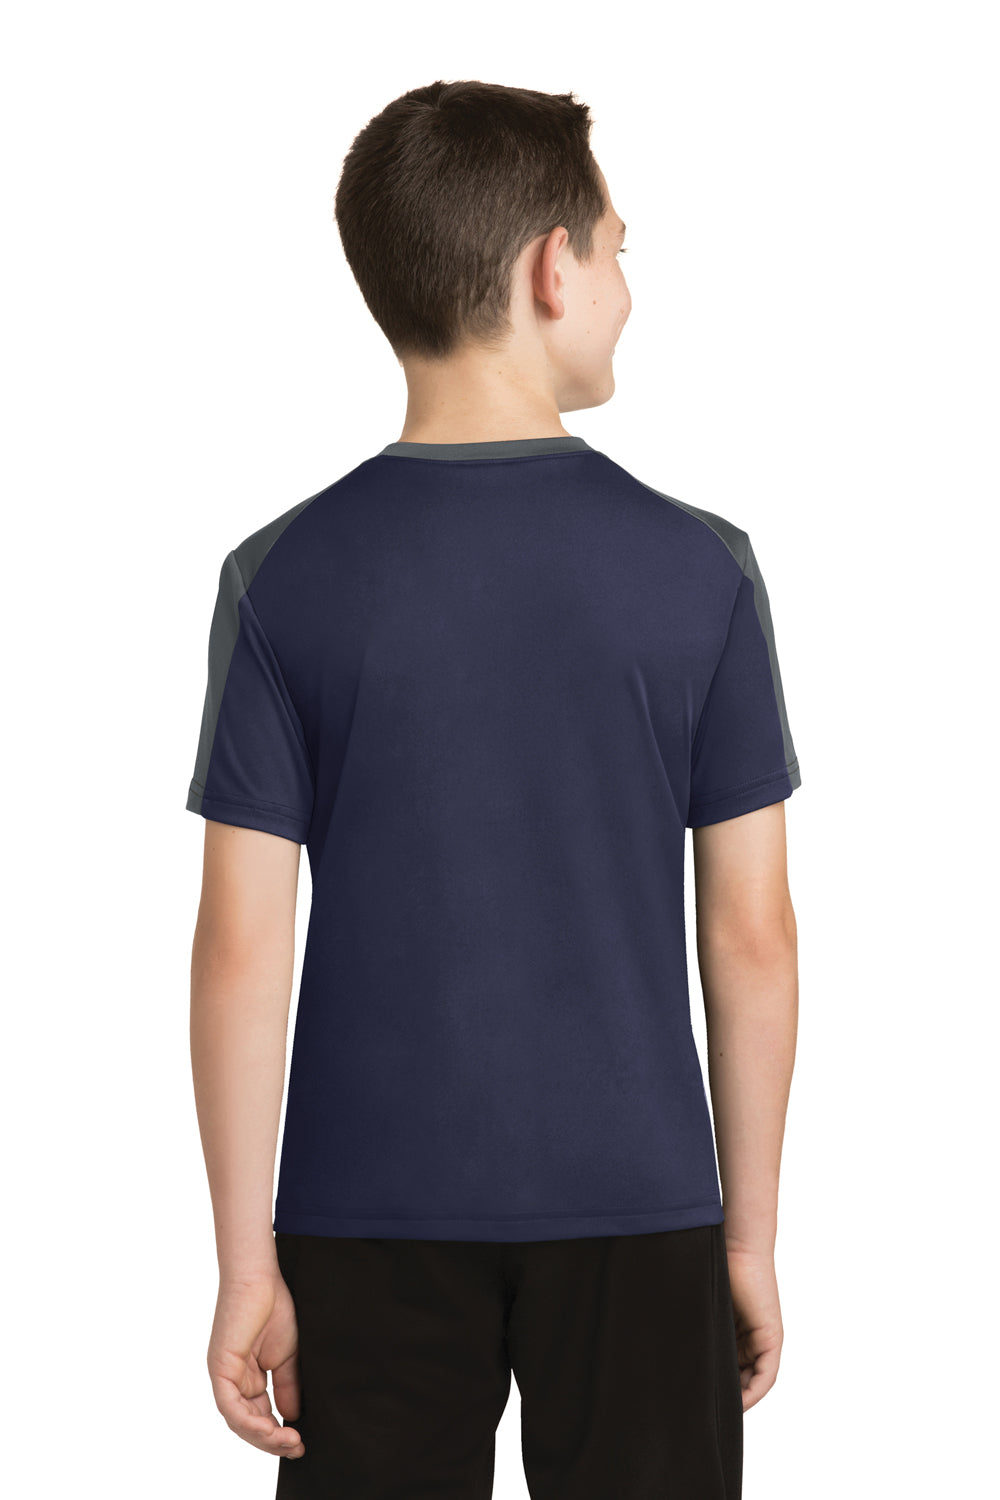 Sport-Tek YST354 Youth Competitor Moisture Wicking Short Sleeve Crewneck T-Shirt Navy Blue/Grey Back